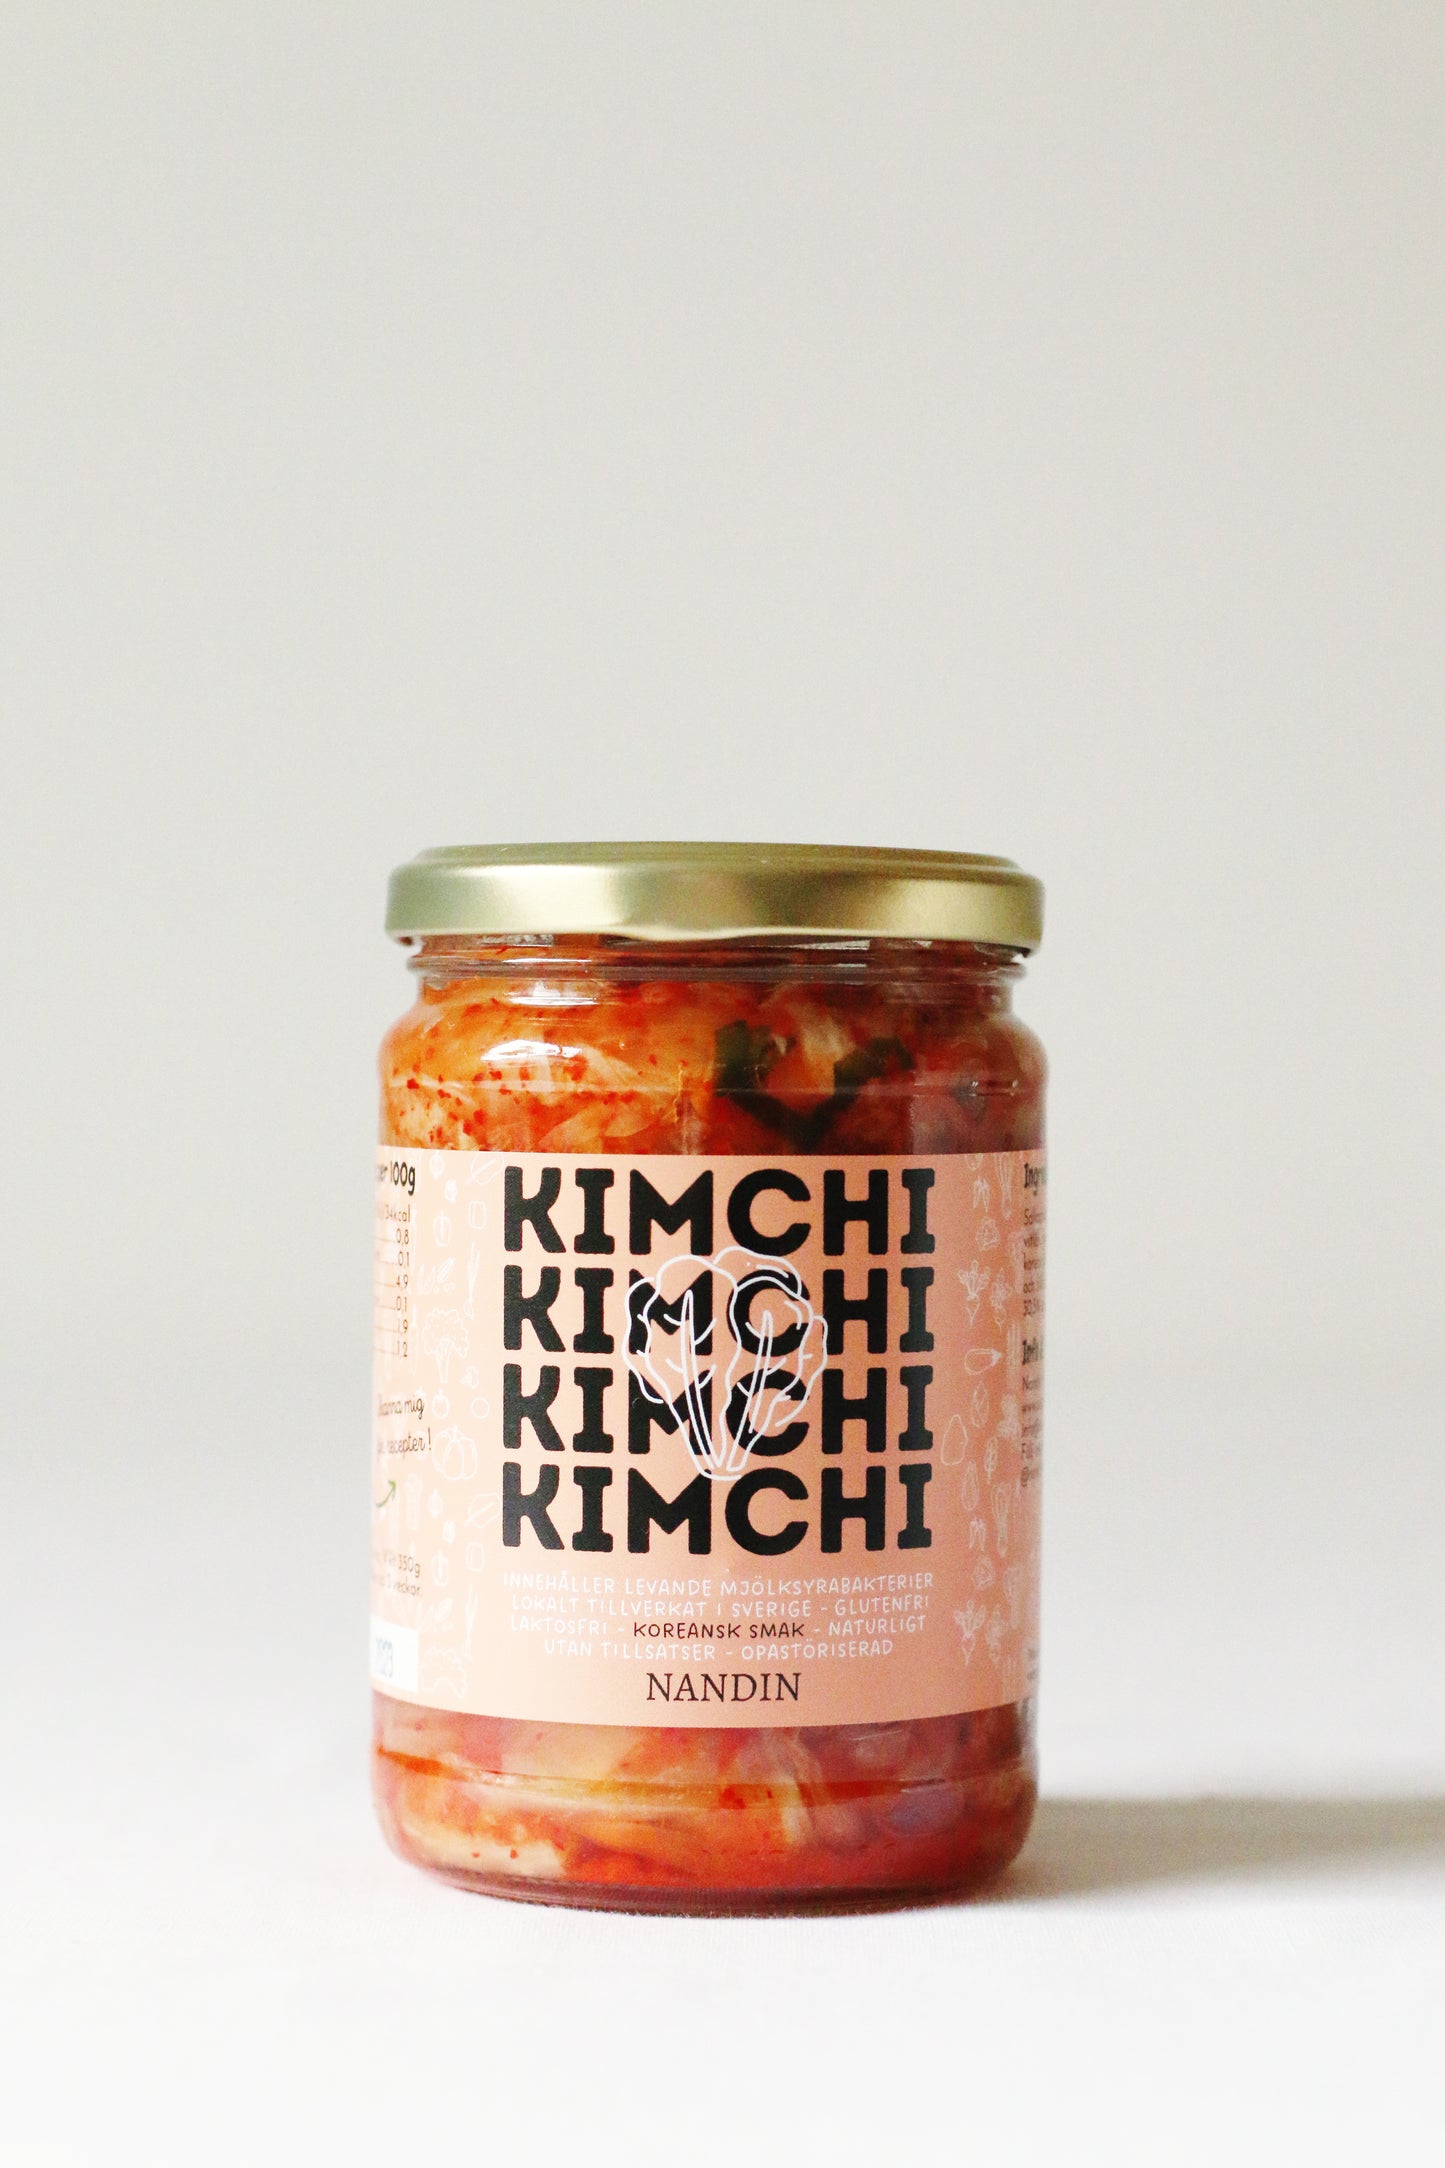 Nandin Premium Kimchi - Svensk Kimchi med äkta koreansk smak! 350g